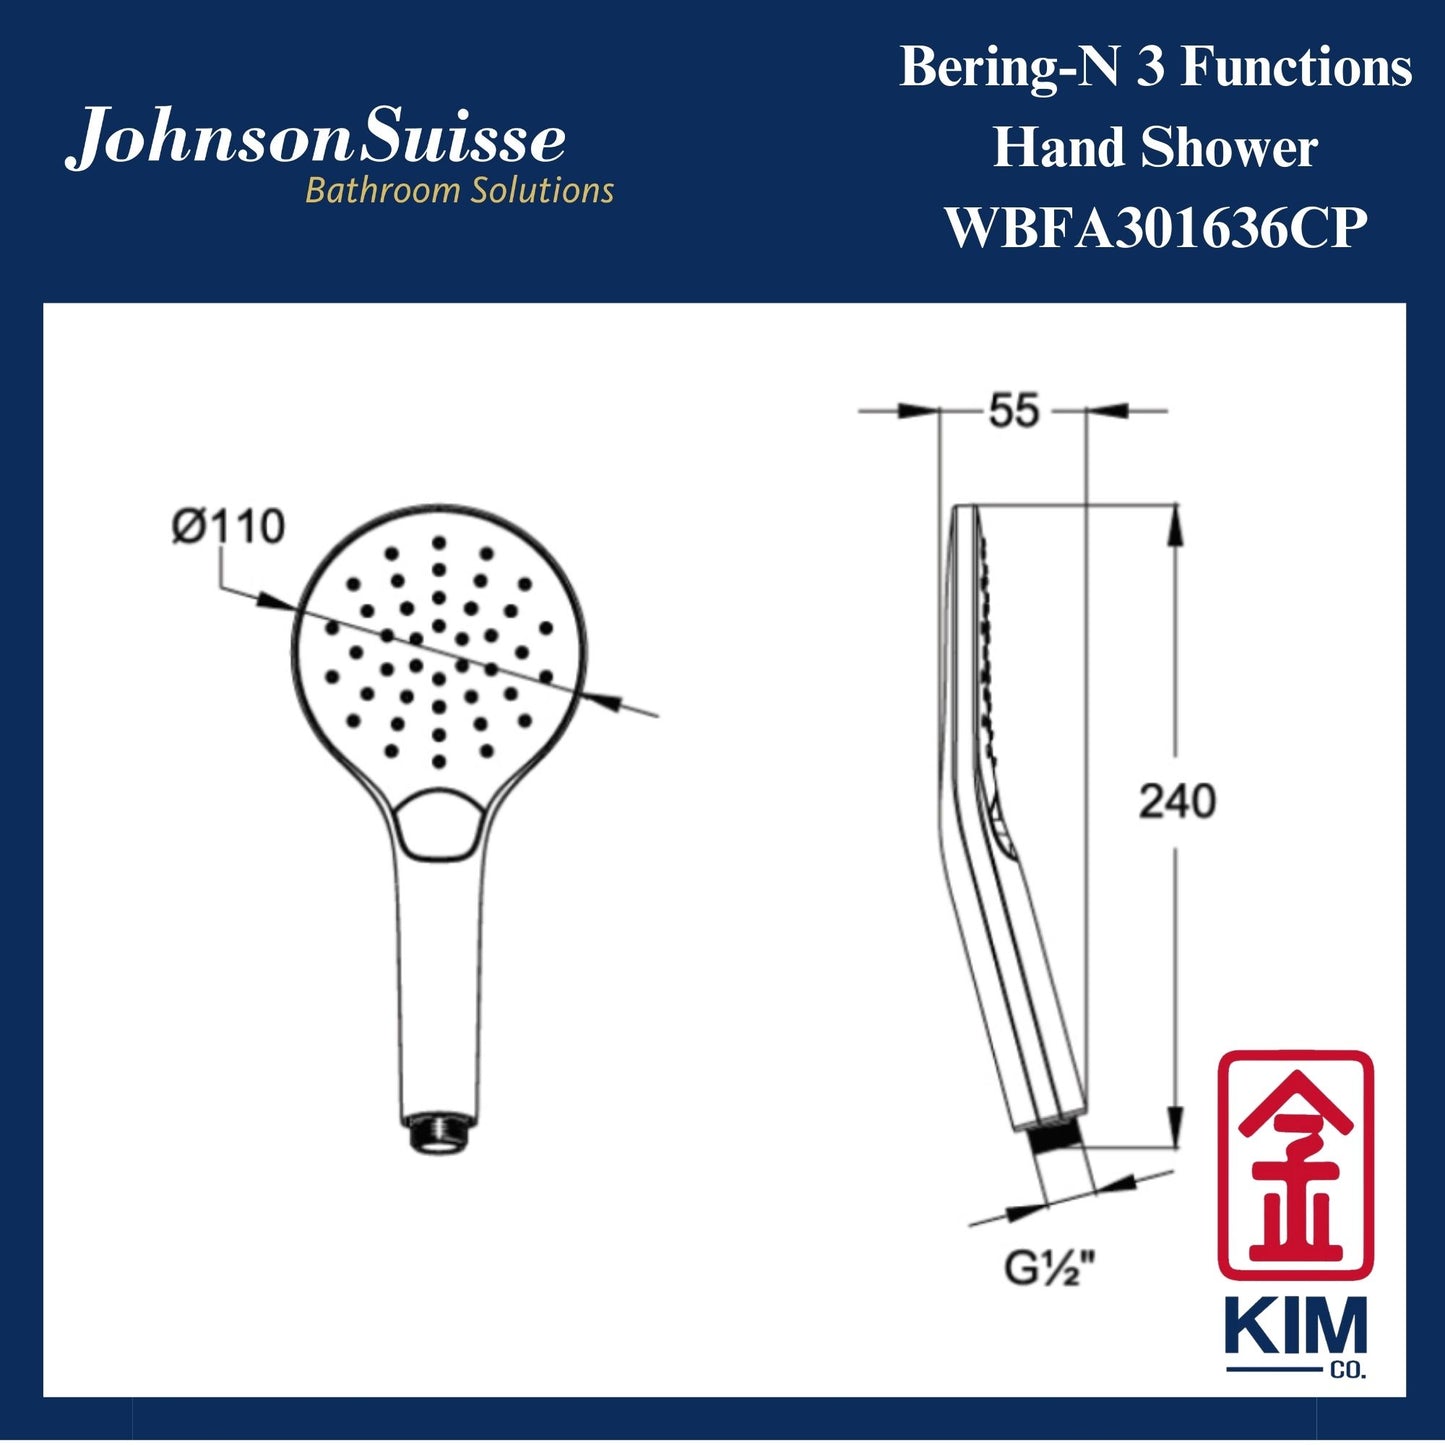 Johnson Suisse Bering-N Hand Shower (WBFA301636CP) (3 Functions)